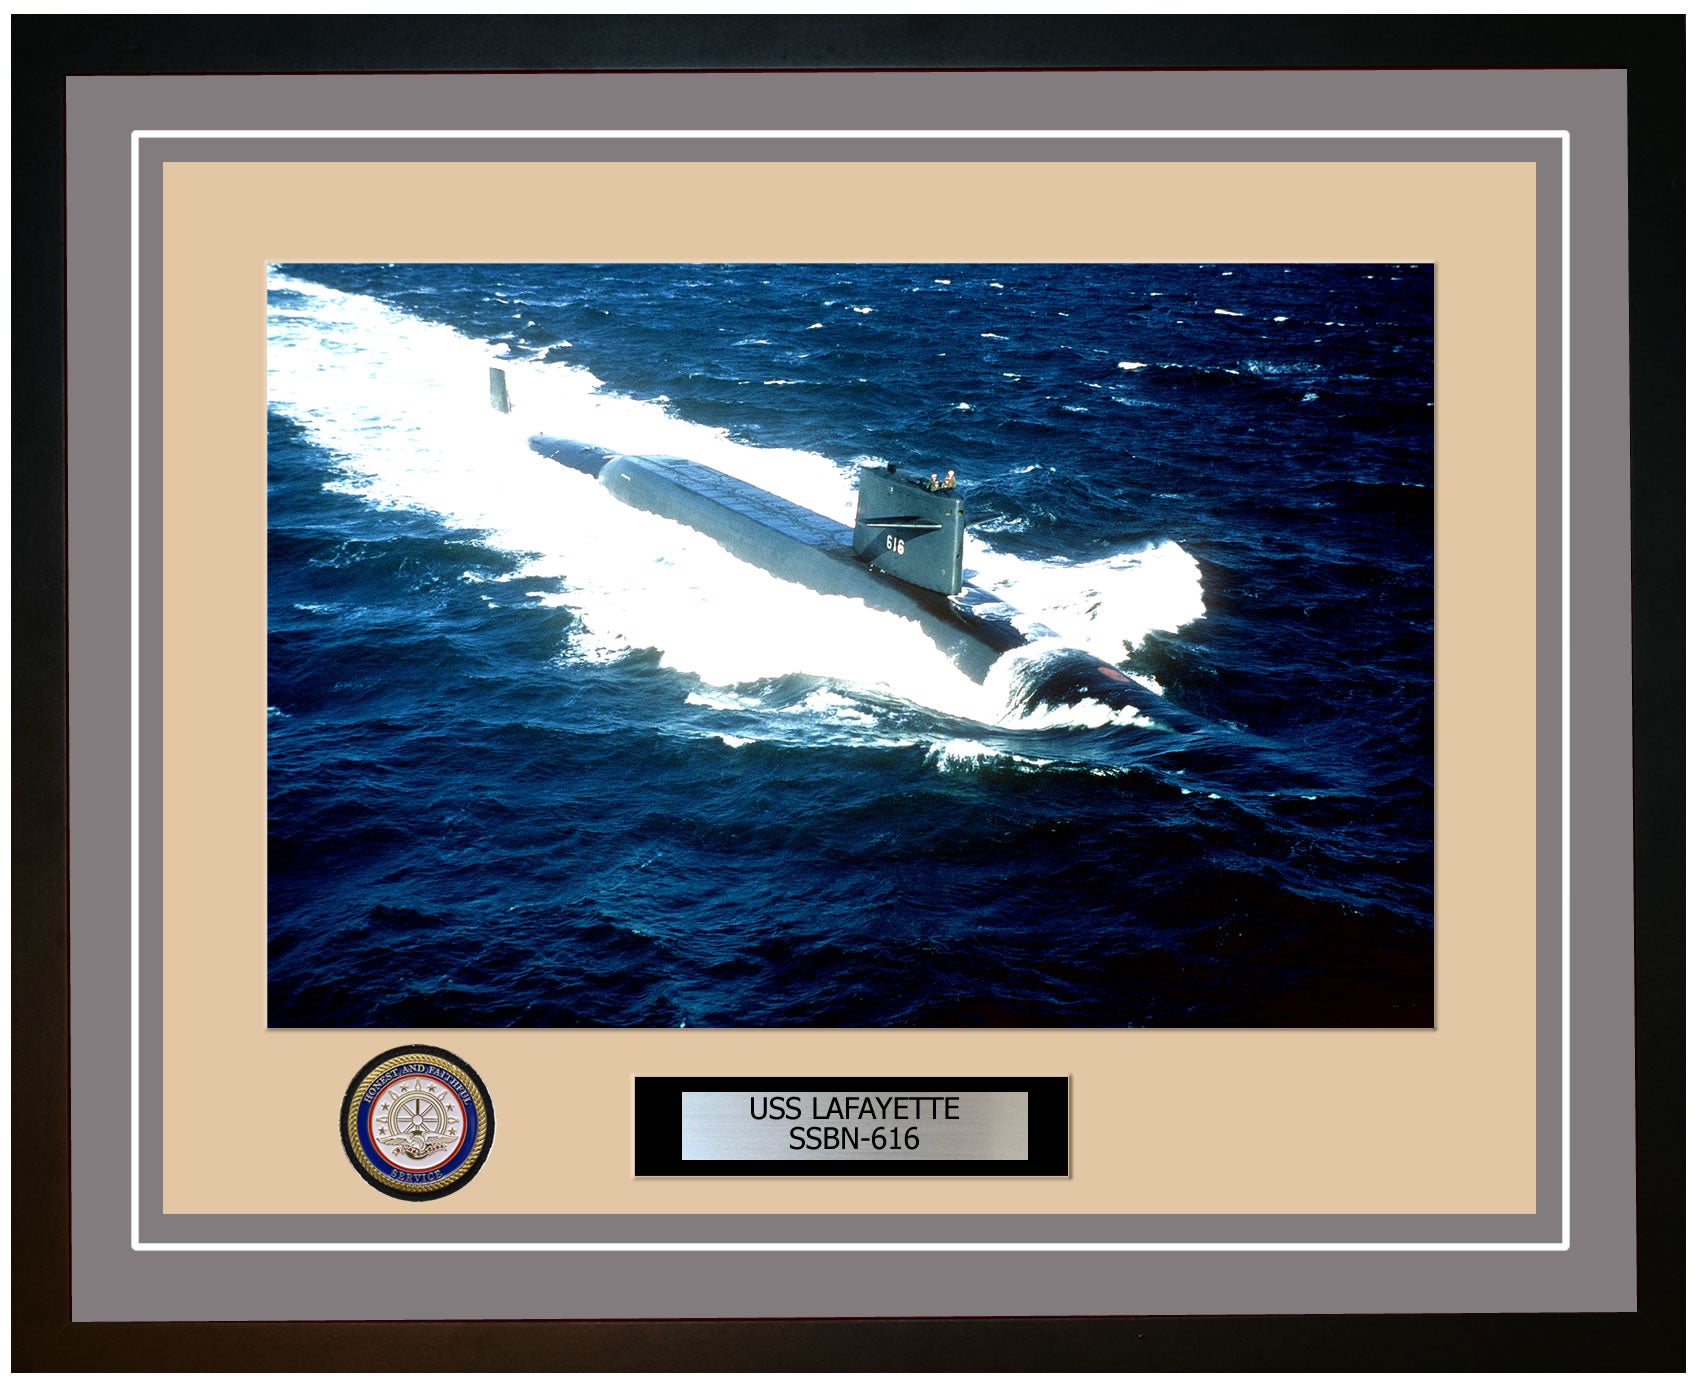 USS Lafayette SSBN-616 Framed Navy Ship Photo Grey